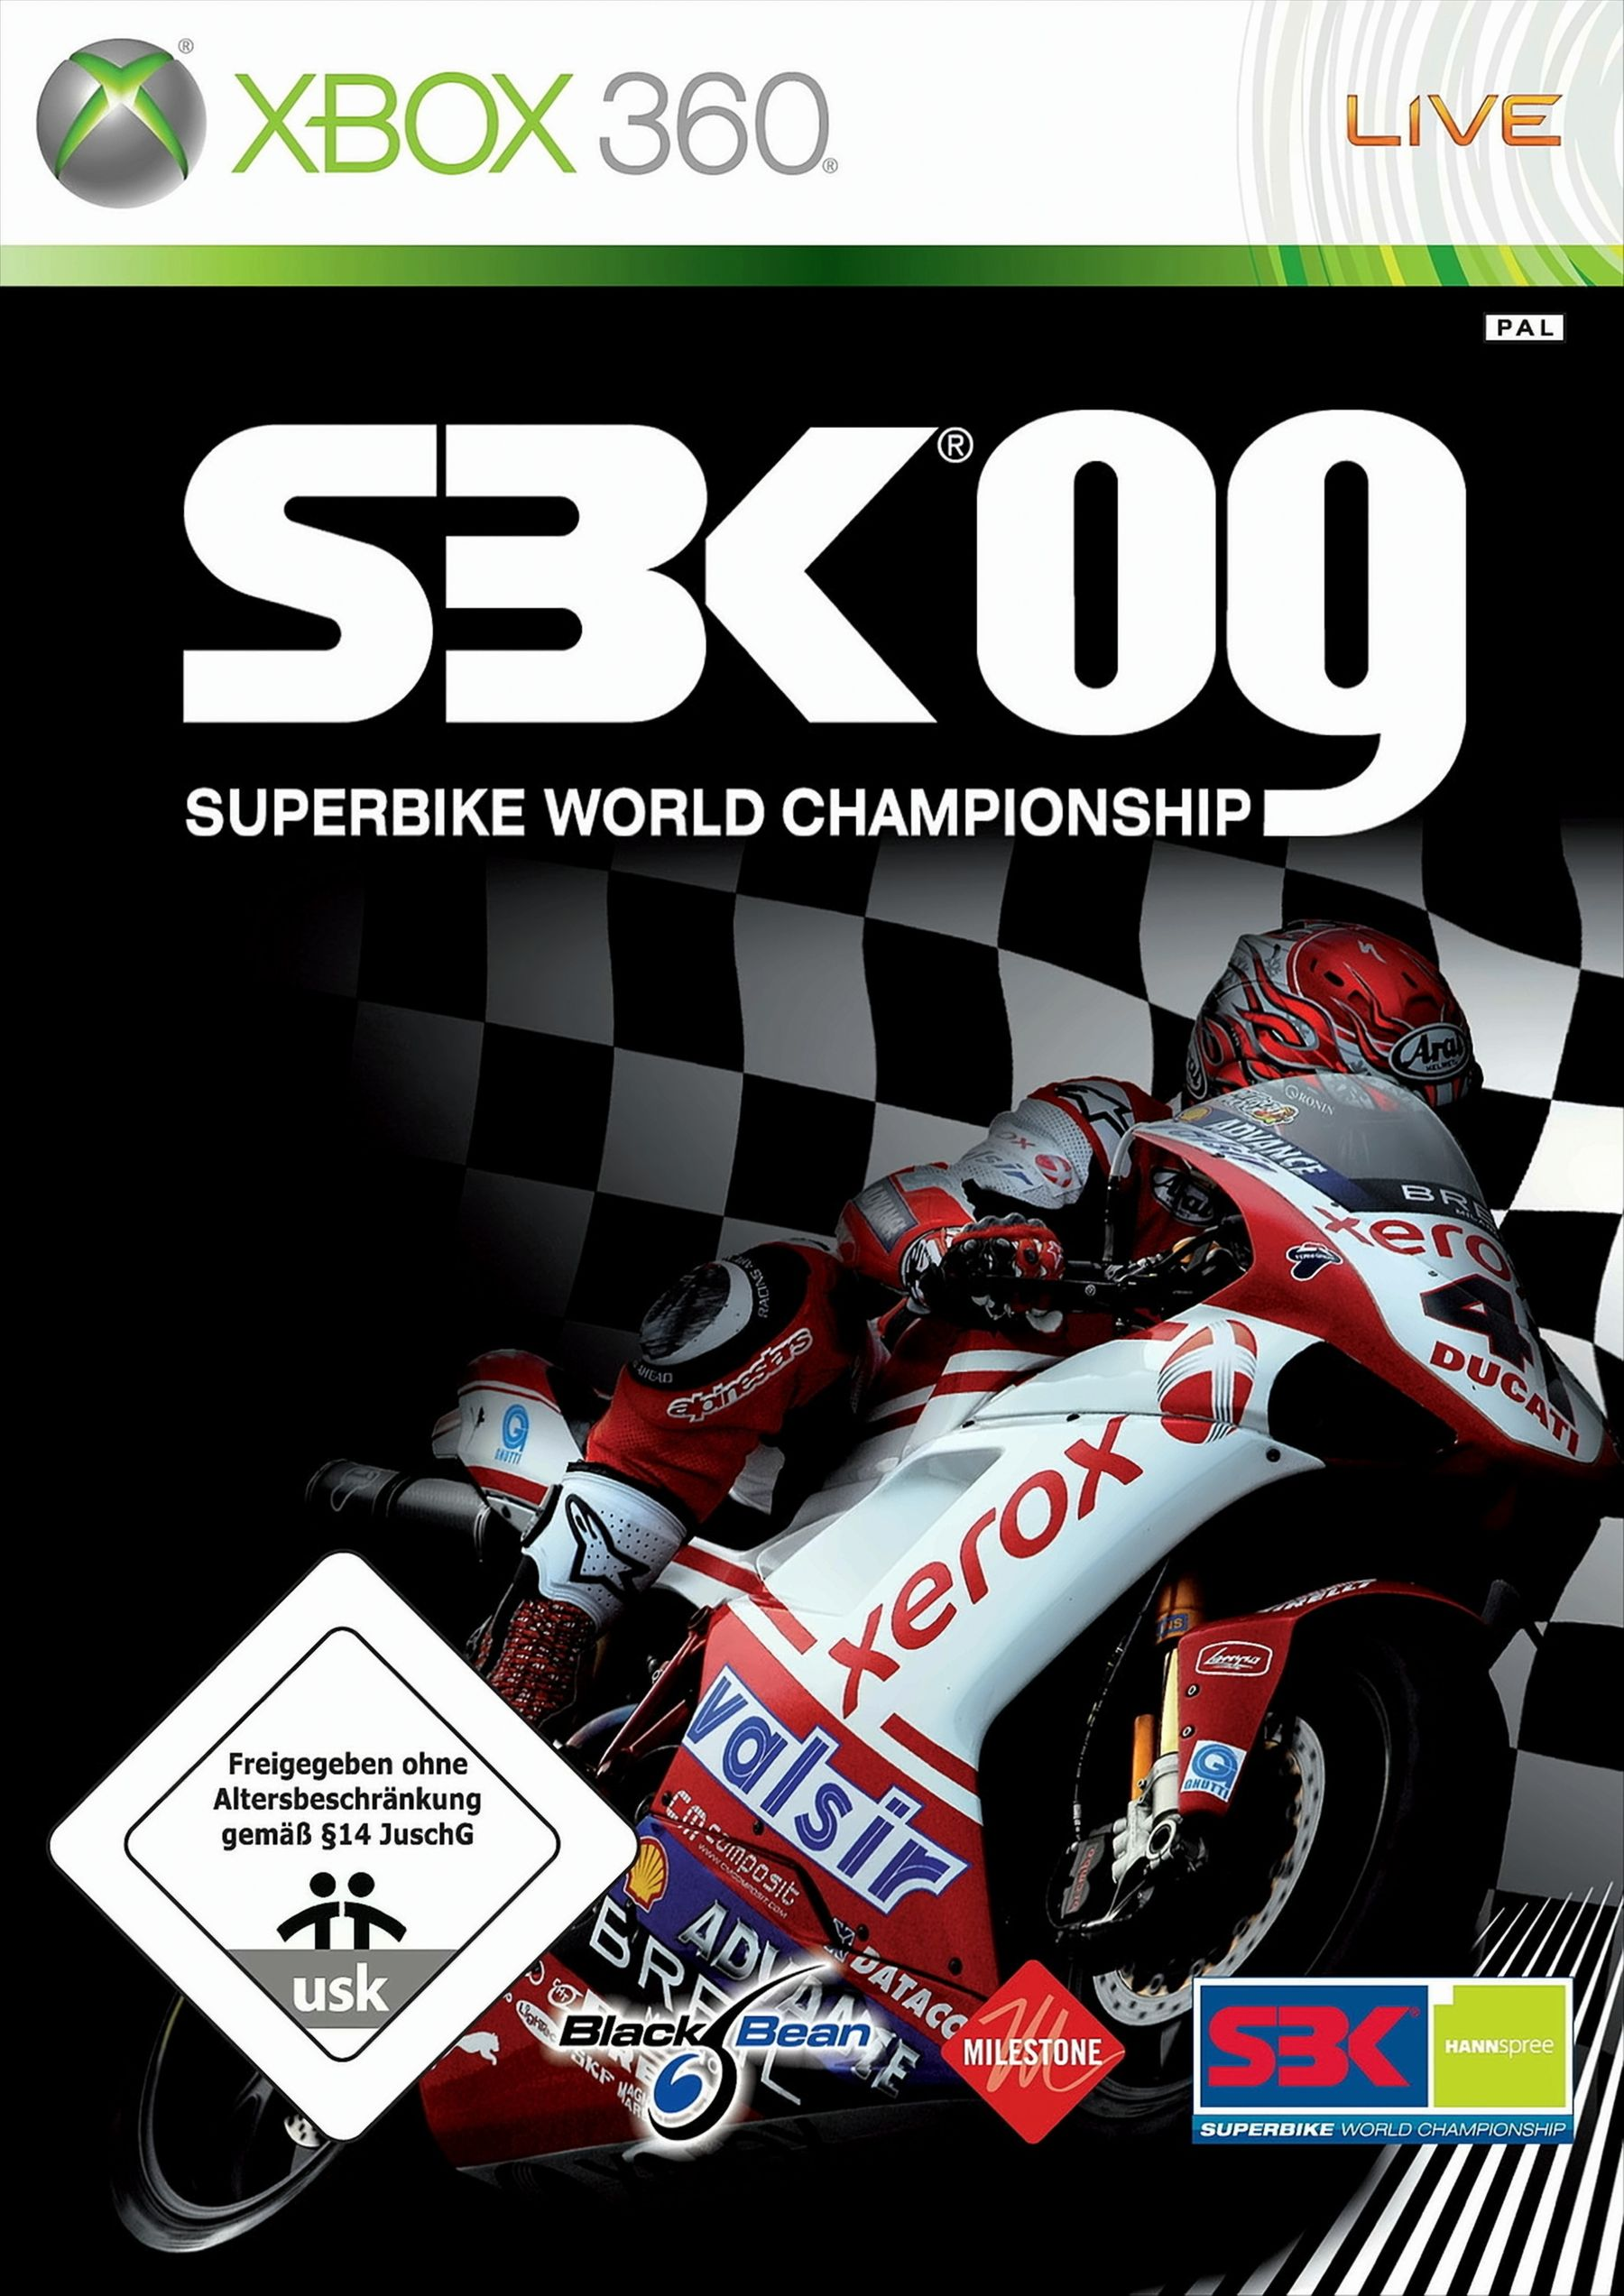 Superbike World 360] - Championship SBK-09 [Xbox